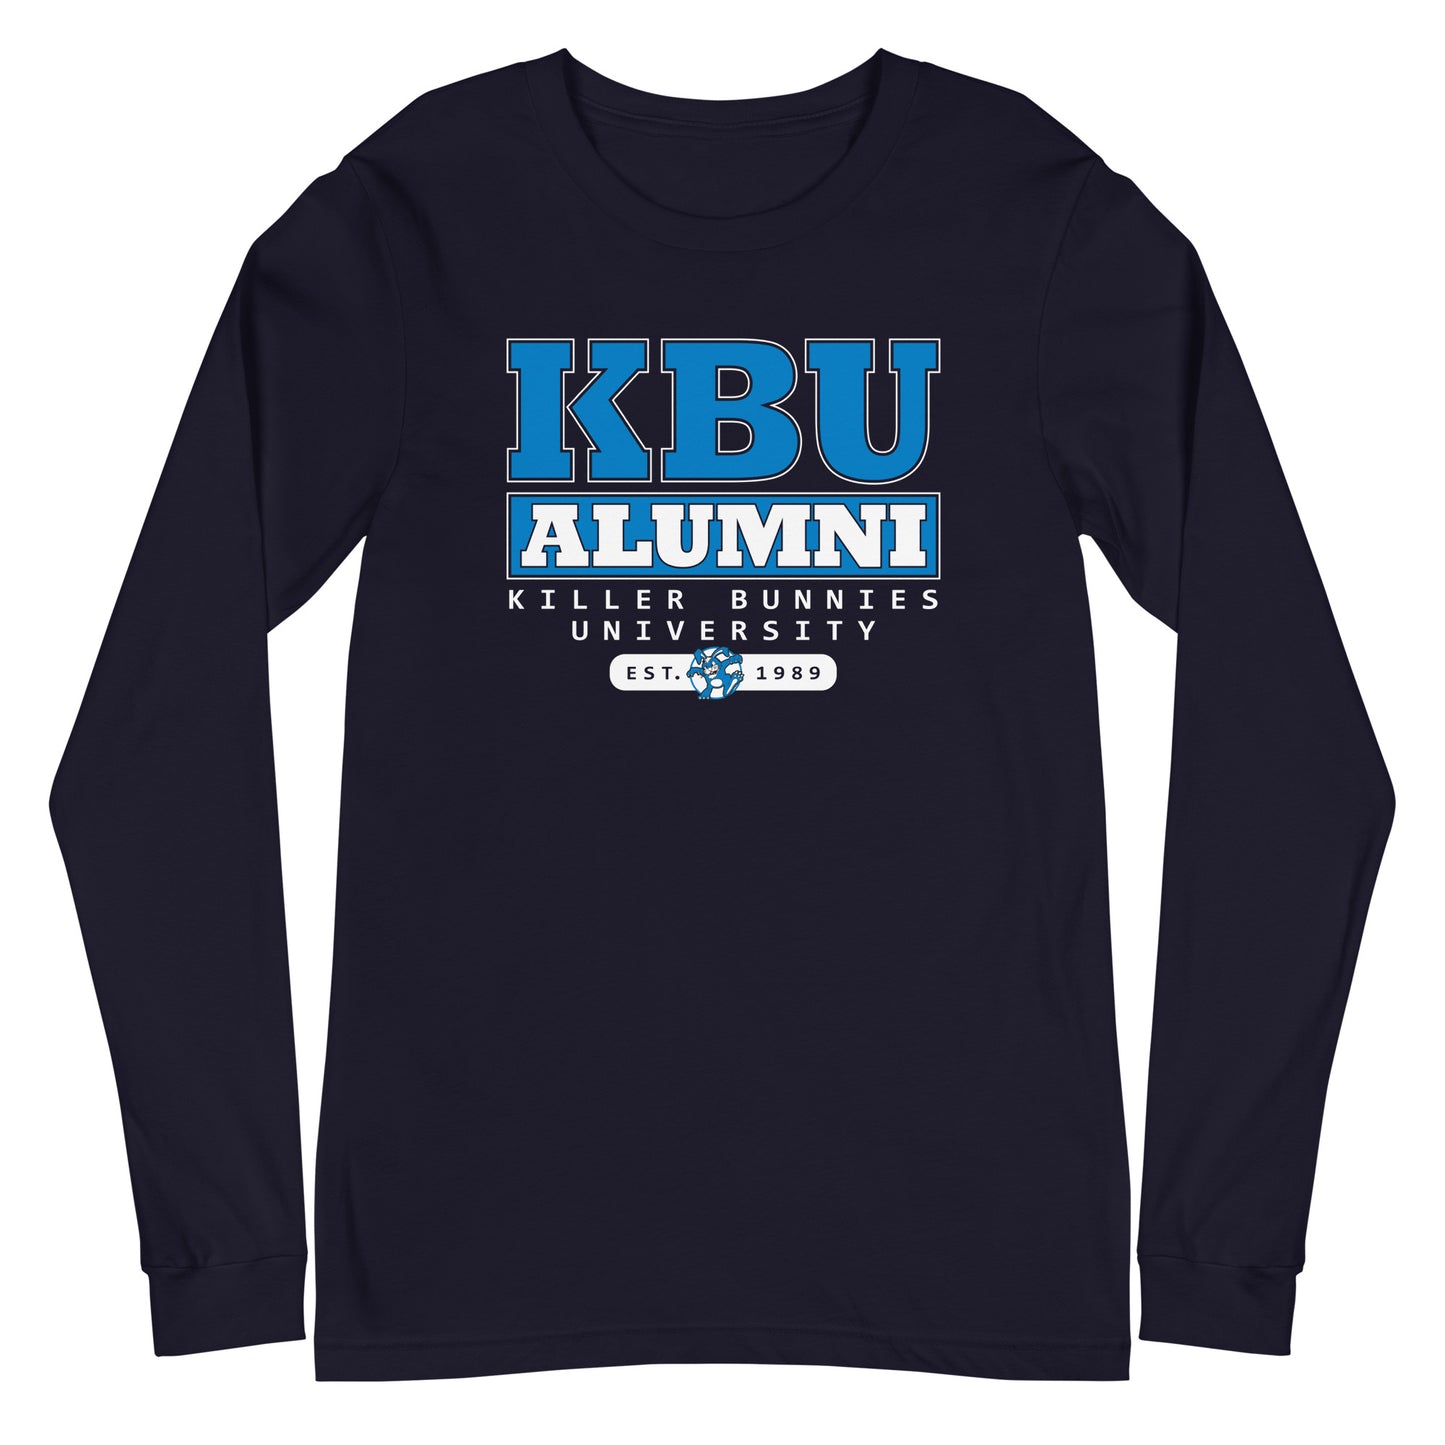 Killer Bunnies Alumni Unisex Long Sleeve T-Shirt